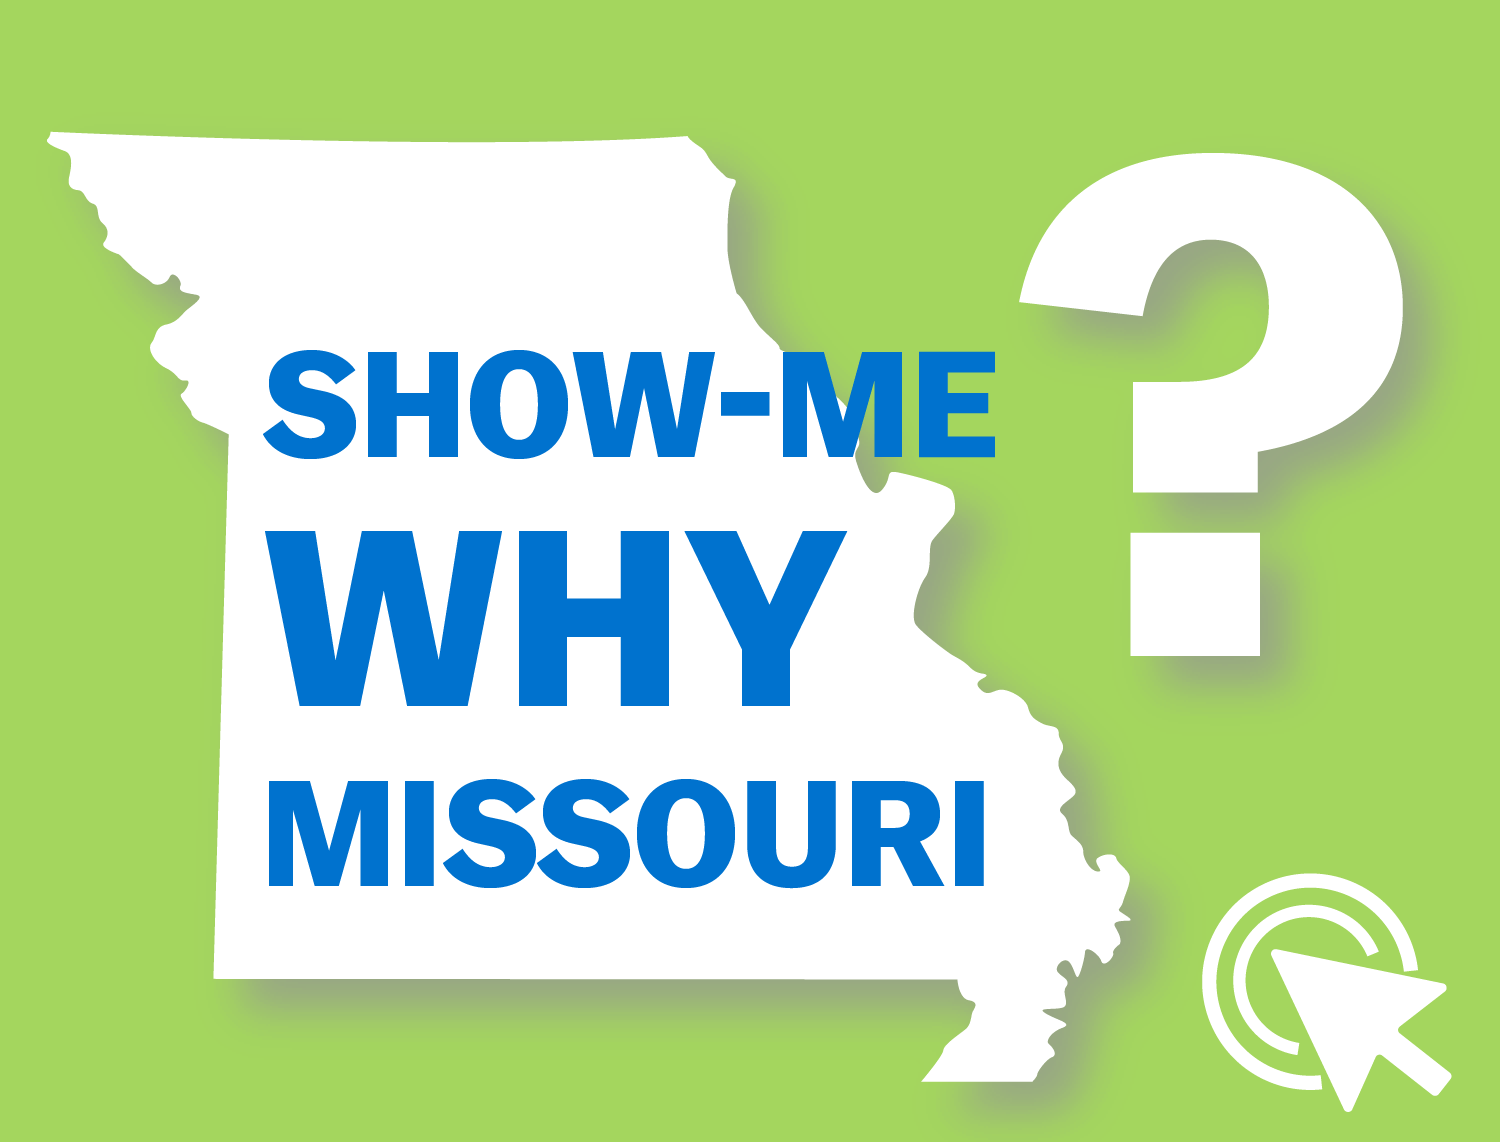 Show-Me Why Missouri